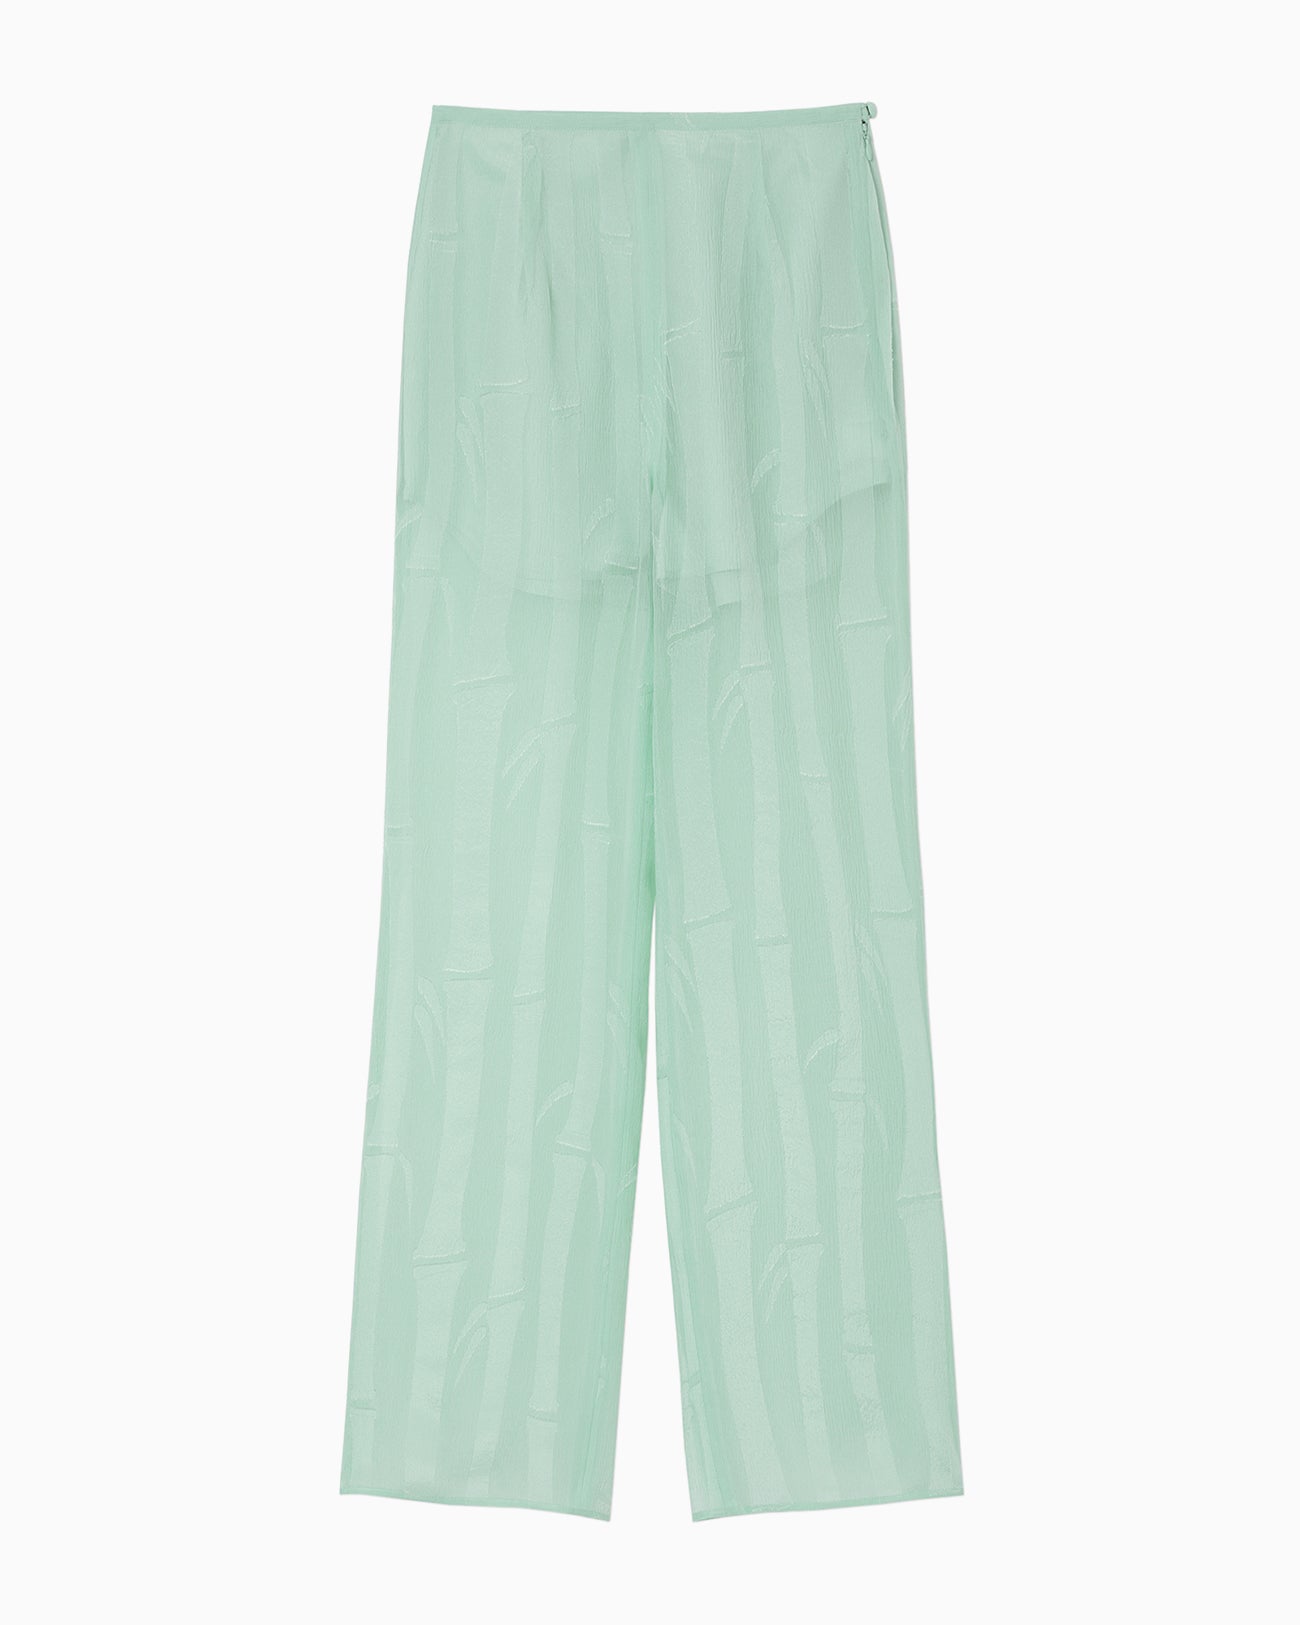 Bamboo Motif Willow Jacquard Sheer Trousers - mint green